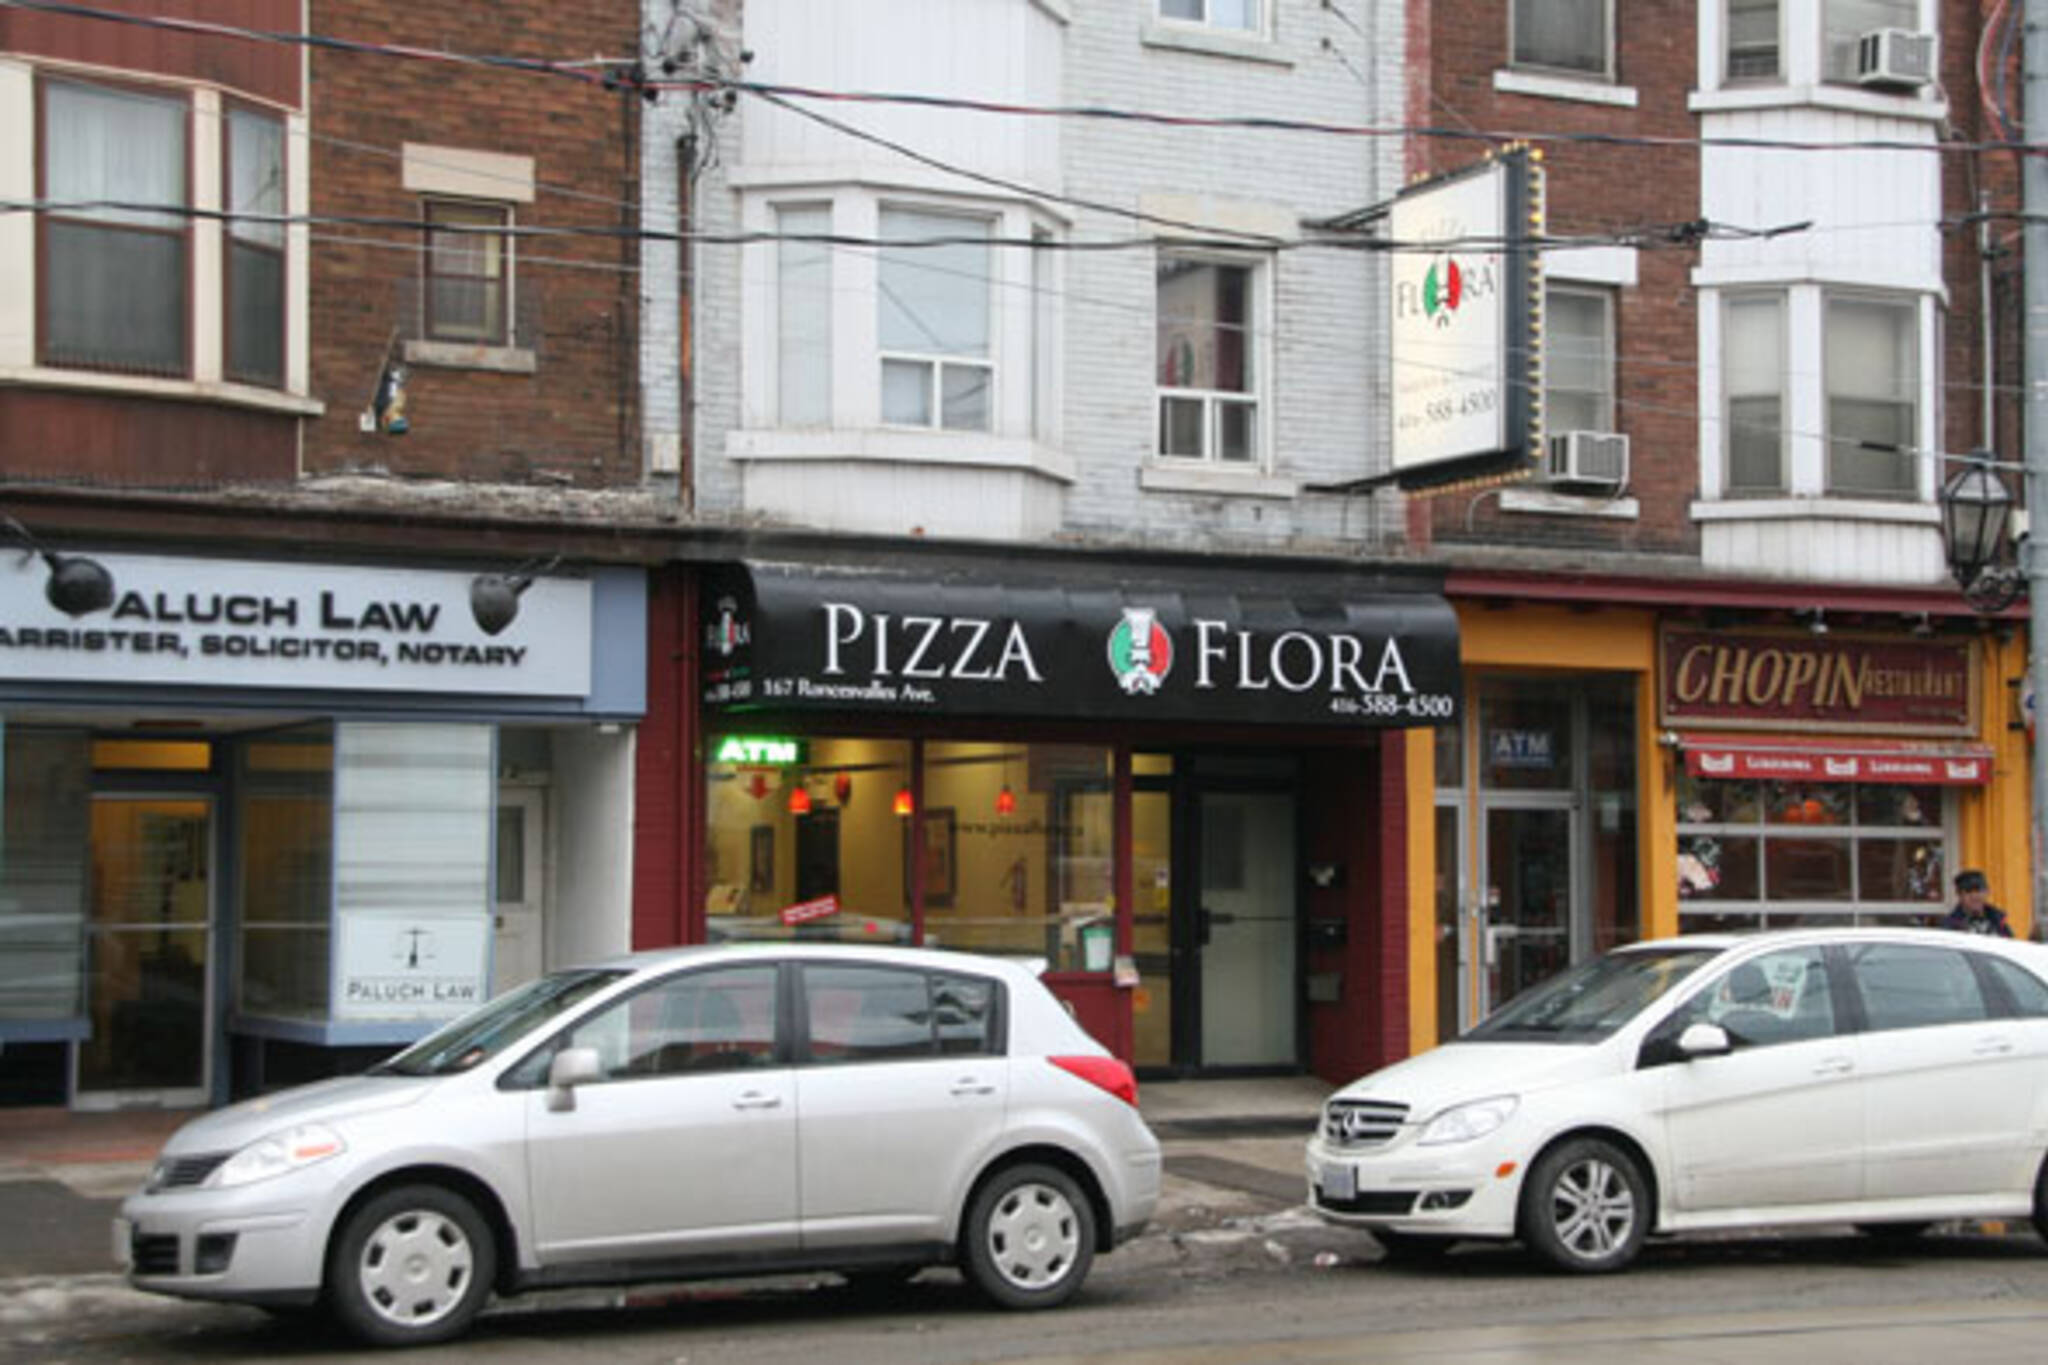 Pizza Flora